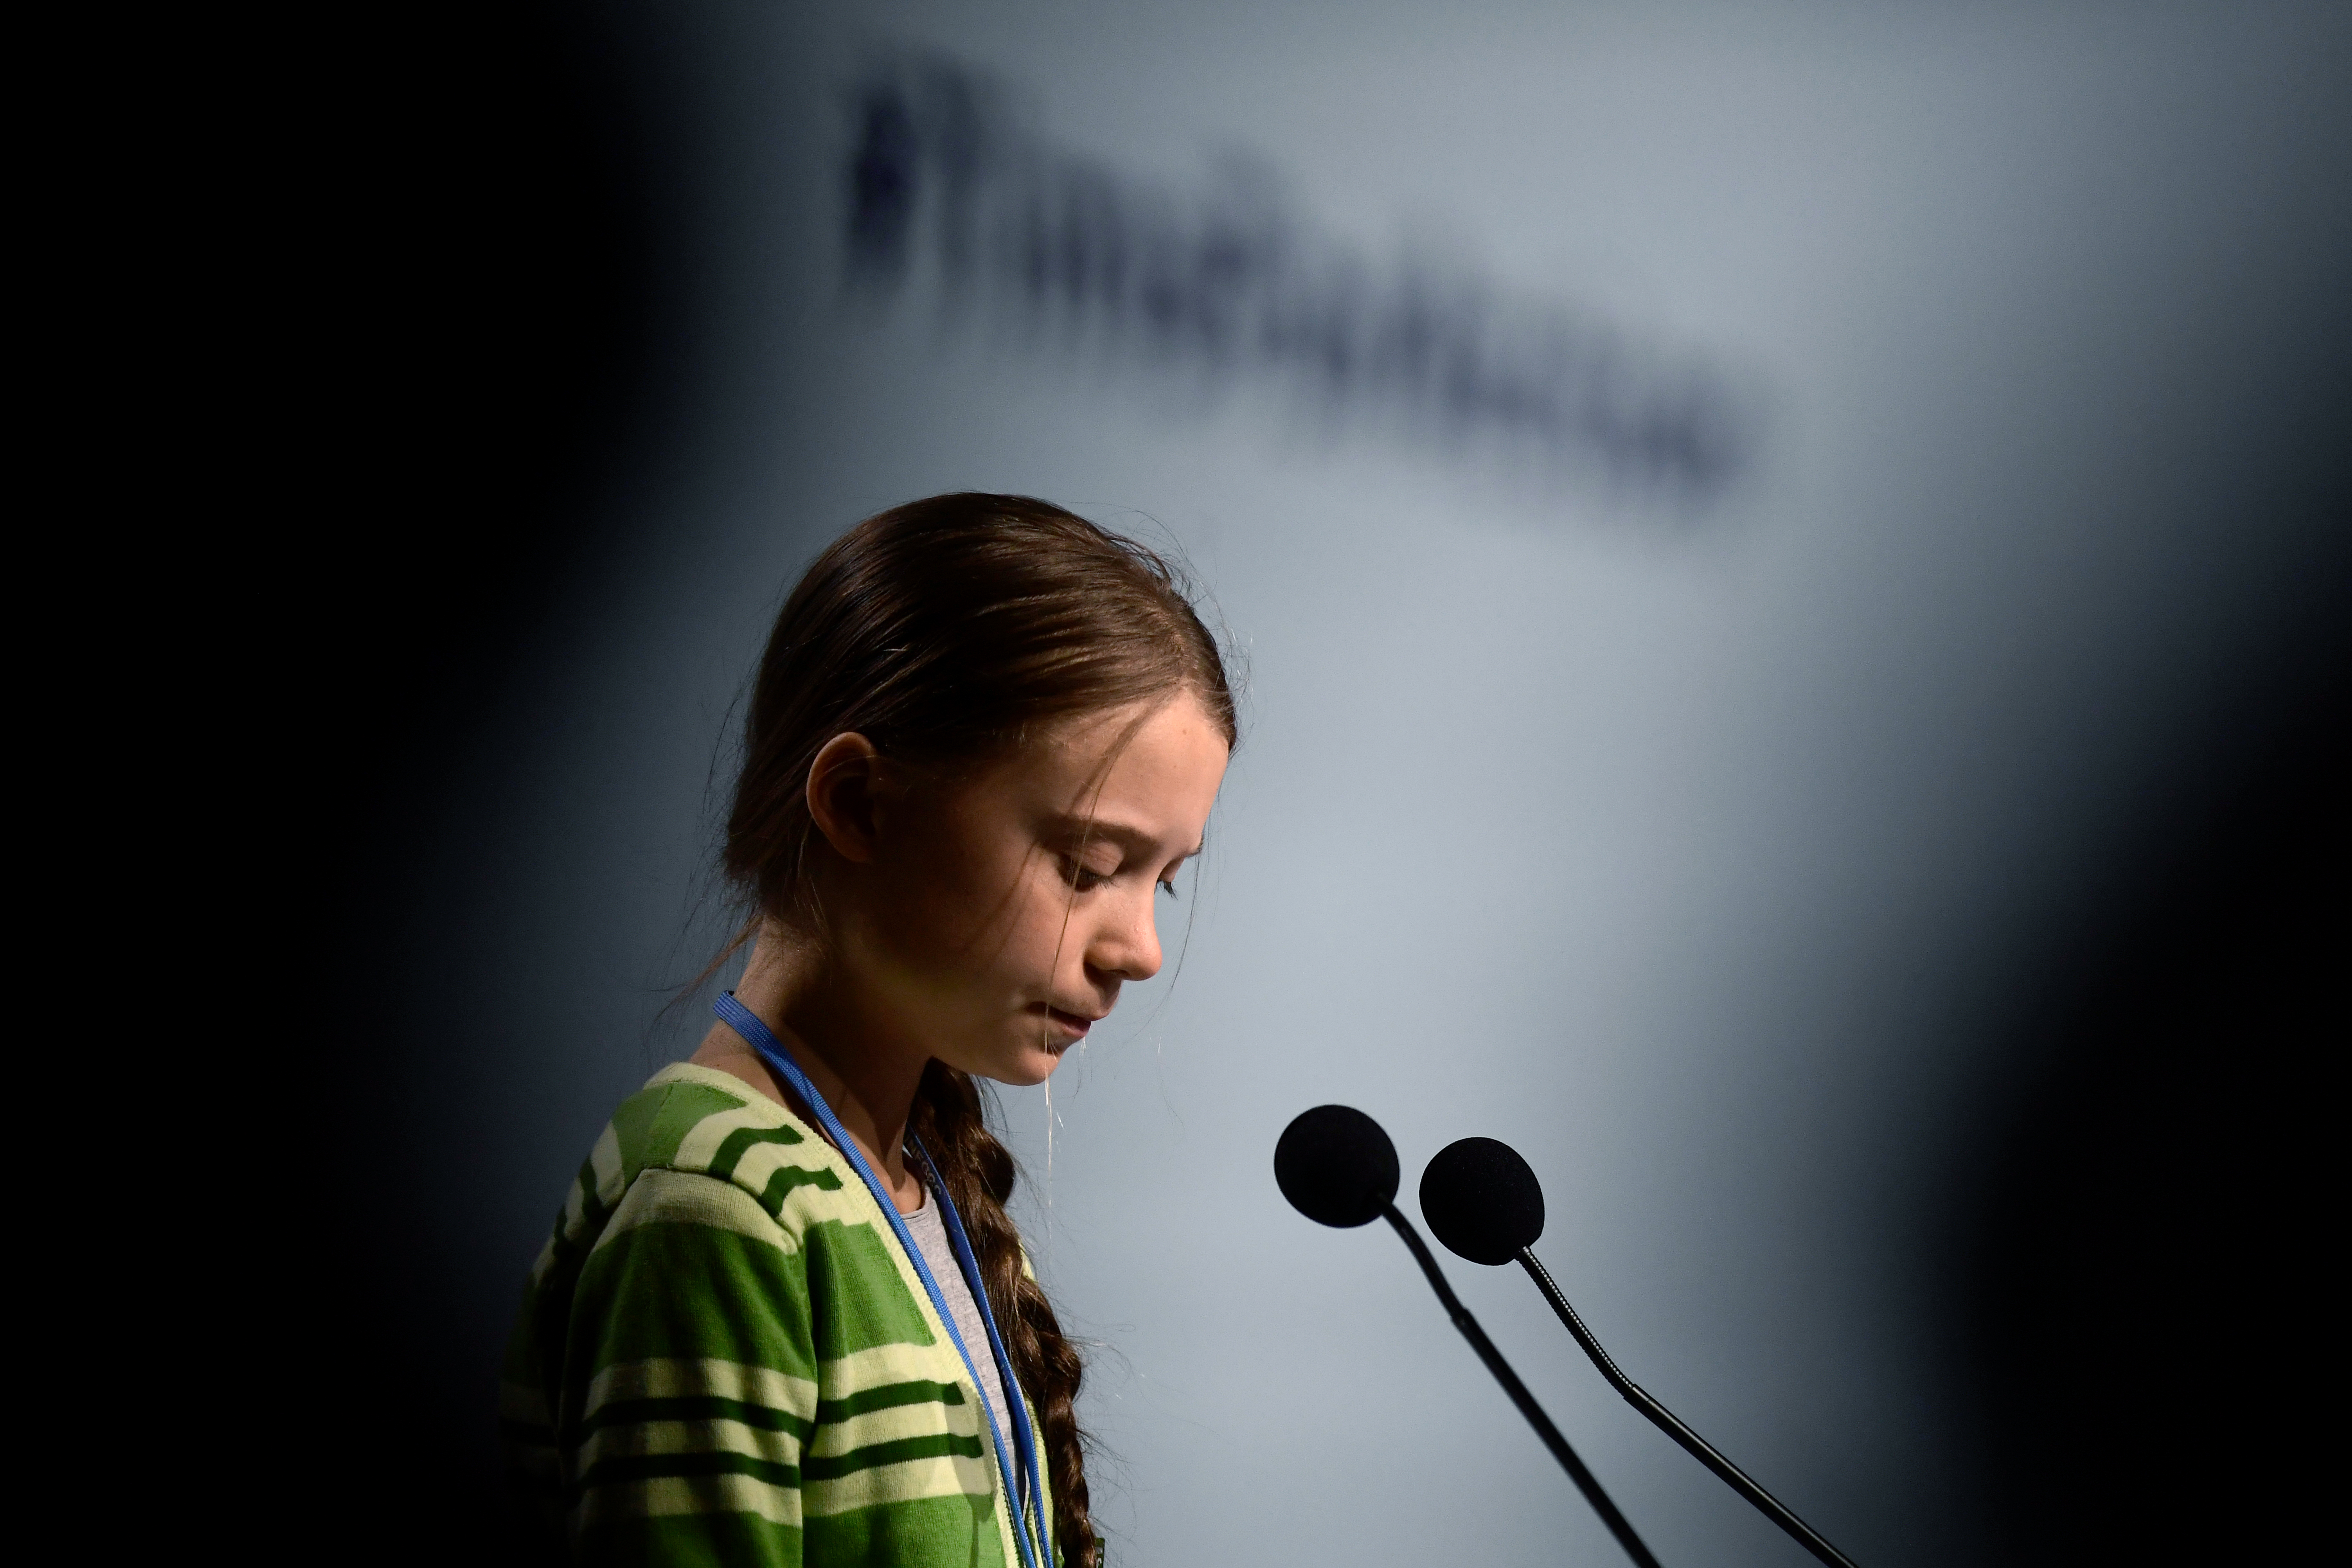 Highlighting Pakistan’s flood woes, Greta Thunberg says Swedish politicians ignoring climate crisis